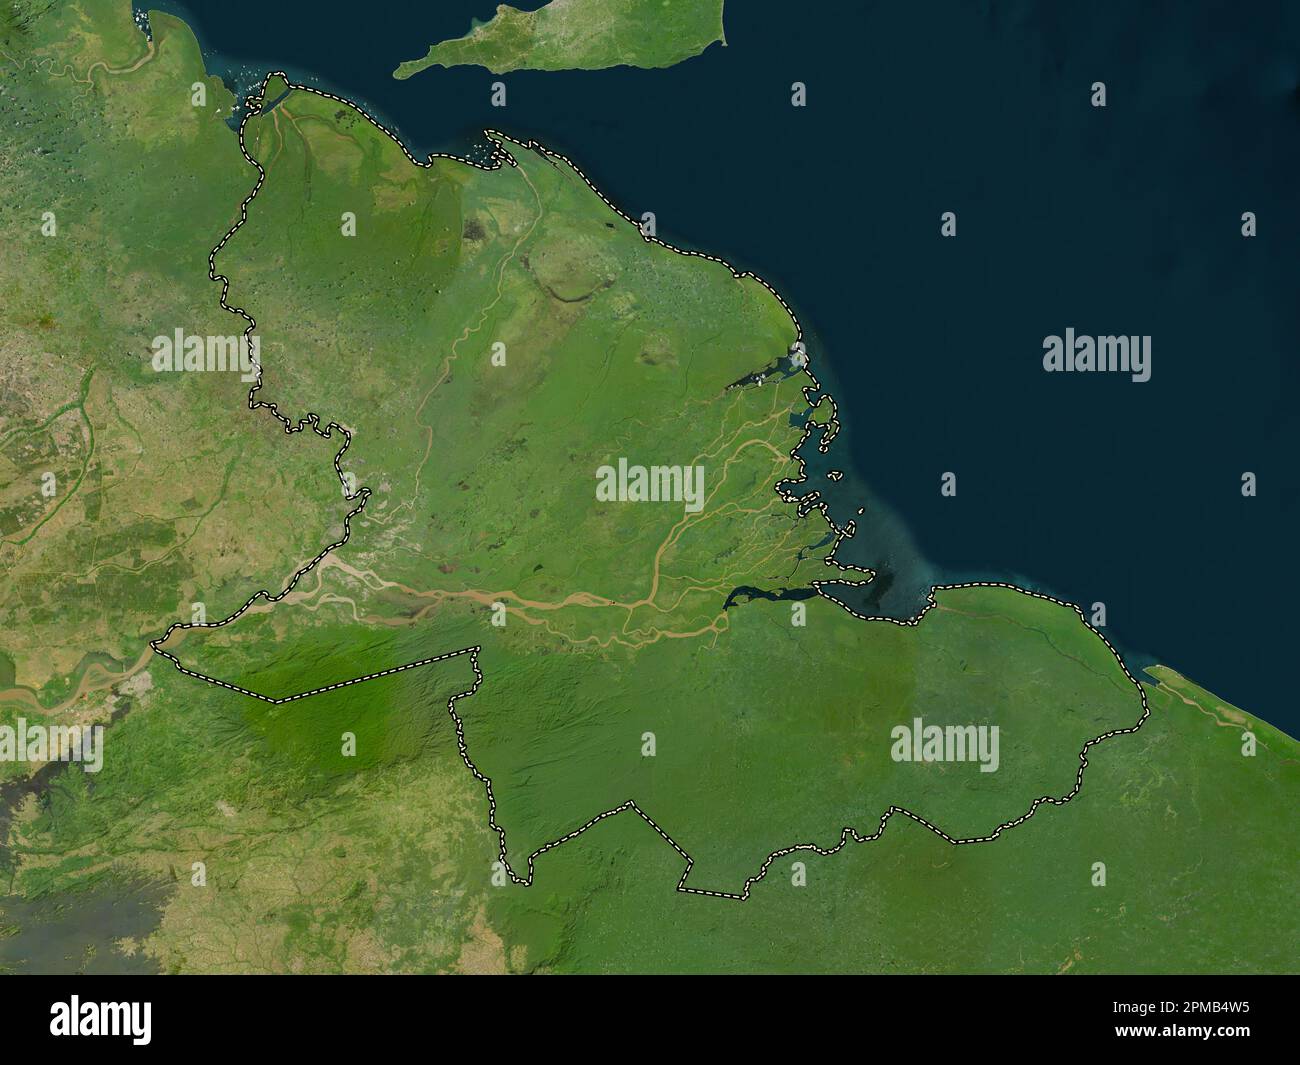 Delta Amacuro, state of Venezuela. Low resolution satellite map Stock Photo